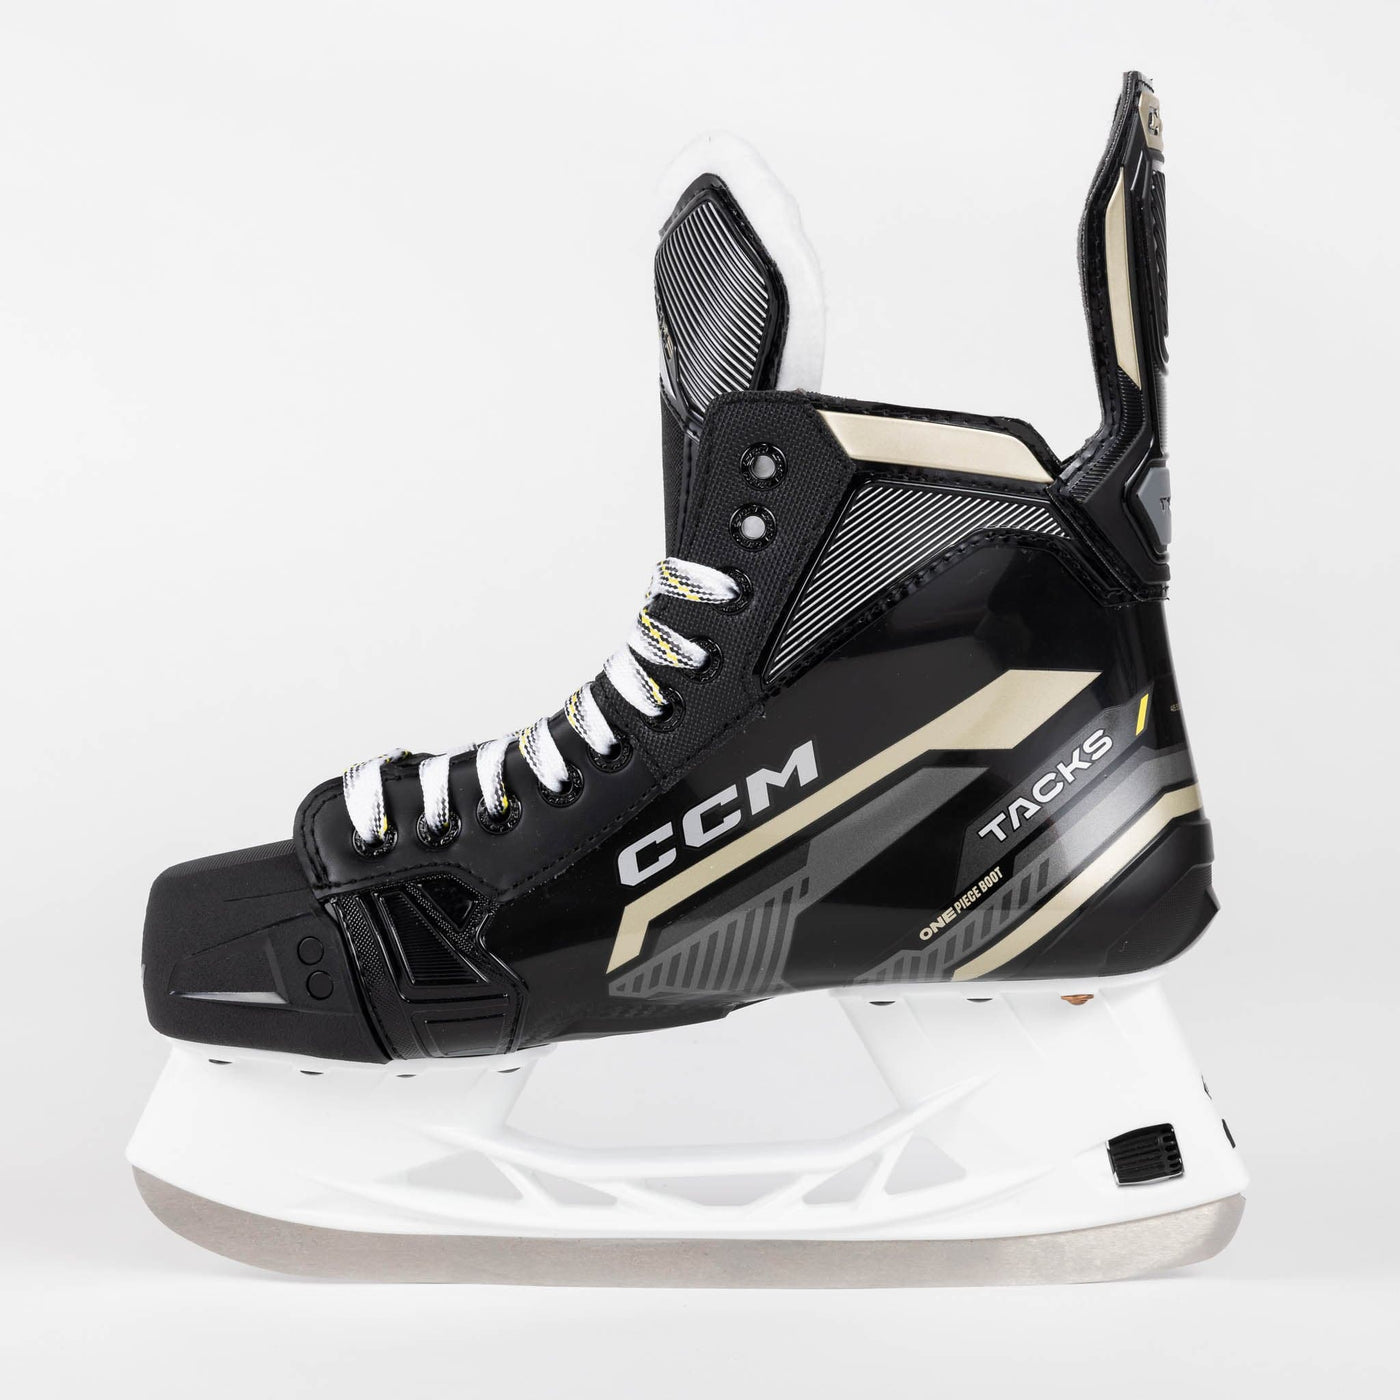 CCM Tacks AS570 Senior Hockey Skates - The Hockey Shop Source For Sports